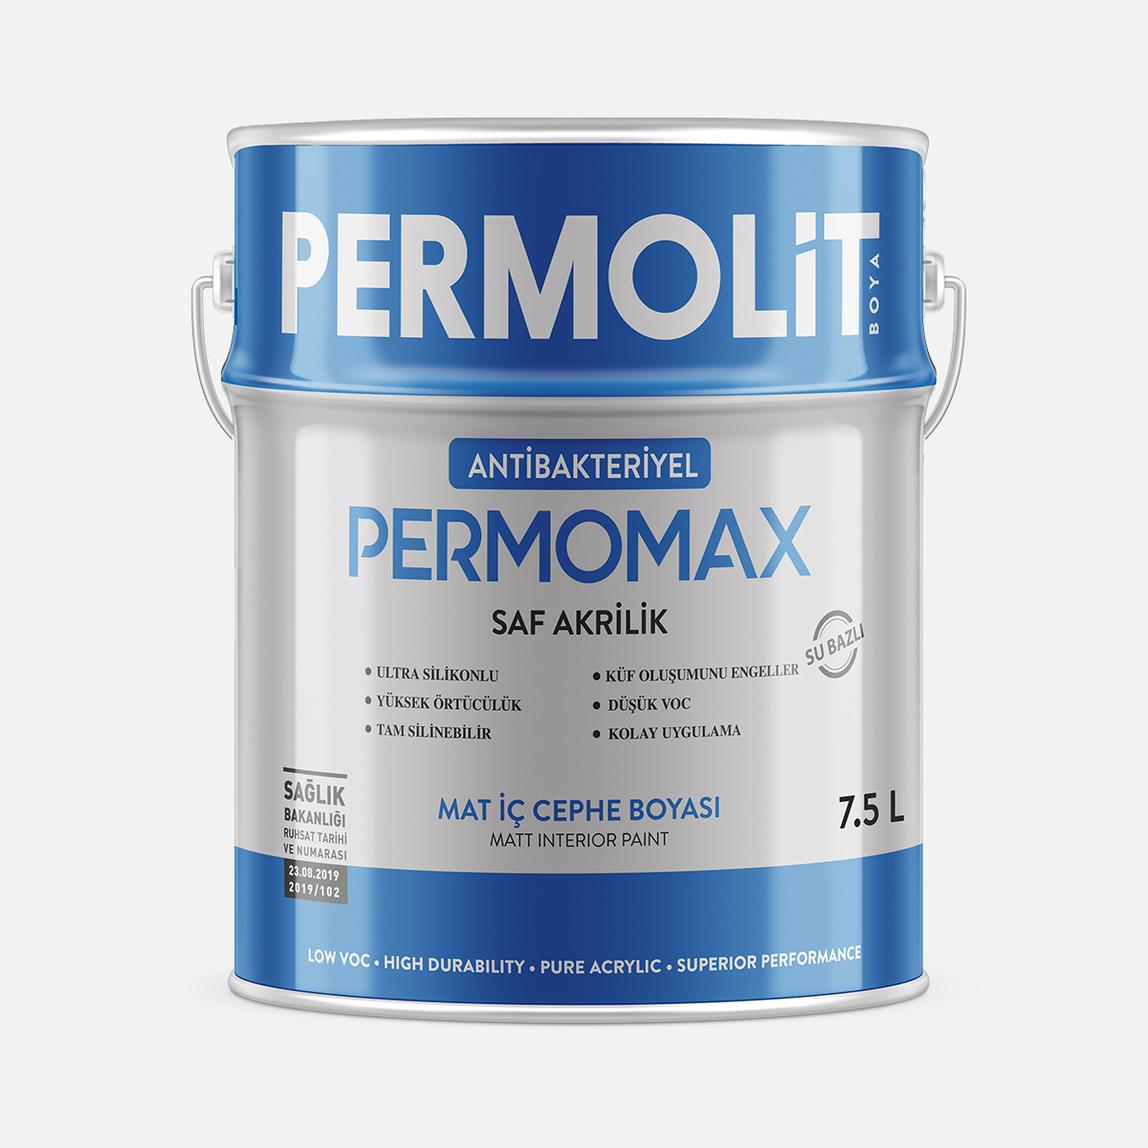    Permolit Permomax Anti-Bakteriyel Mat Beyaz İç Cephe Boyası 7,5l 